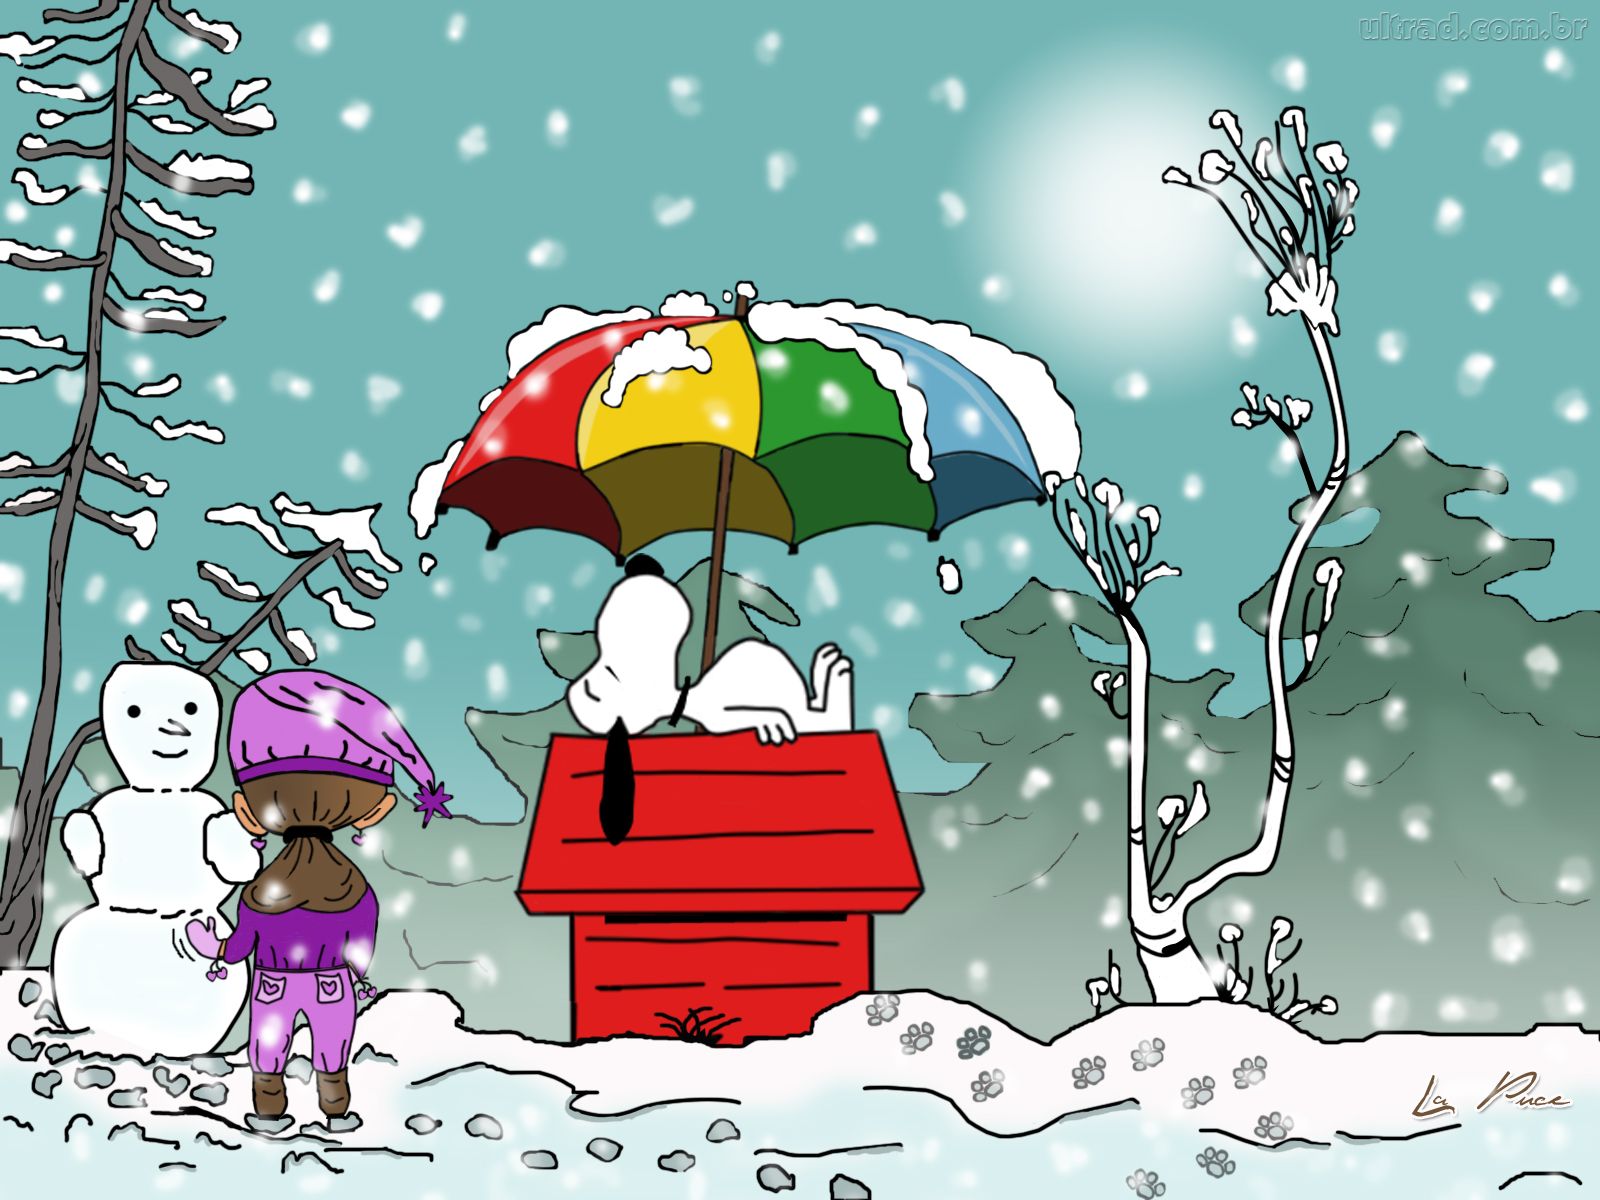 fond d'écran de noël snoopy,dessin animé,illustration,hiver,réveillon de noël,arbre